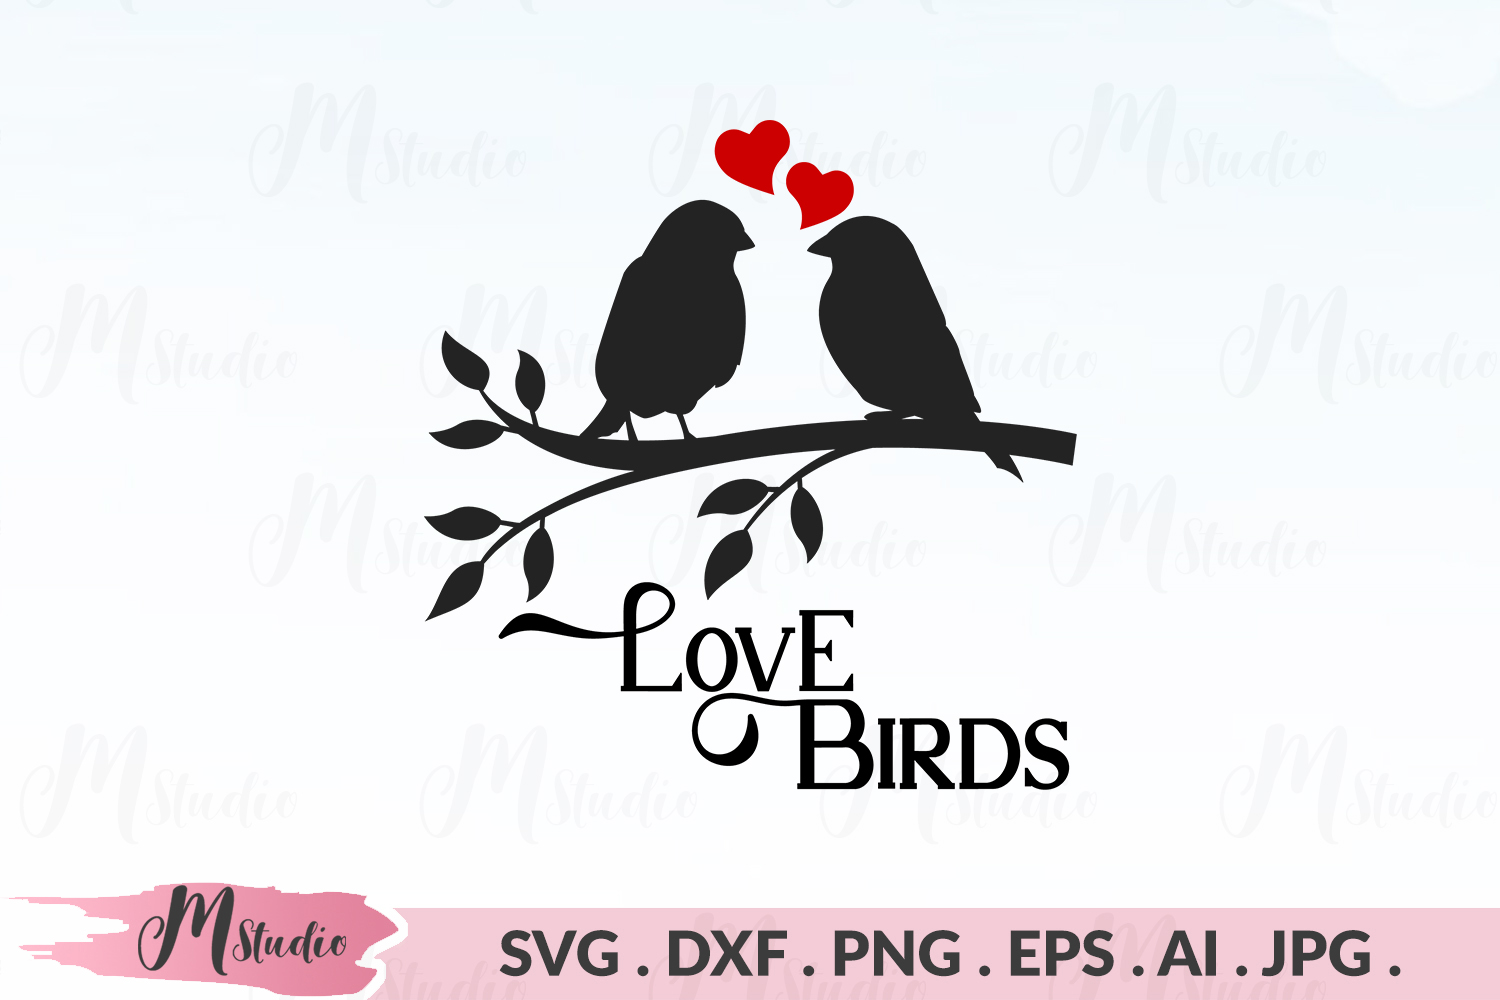 Download love birds svg. (179171) | Cut Files | Design Bundles